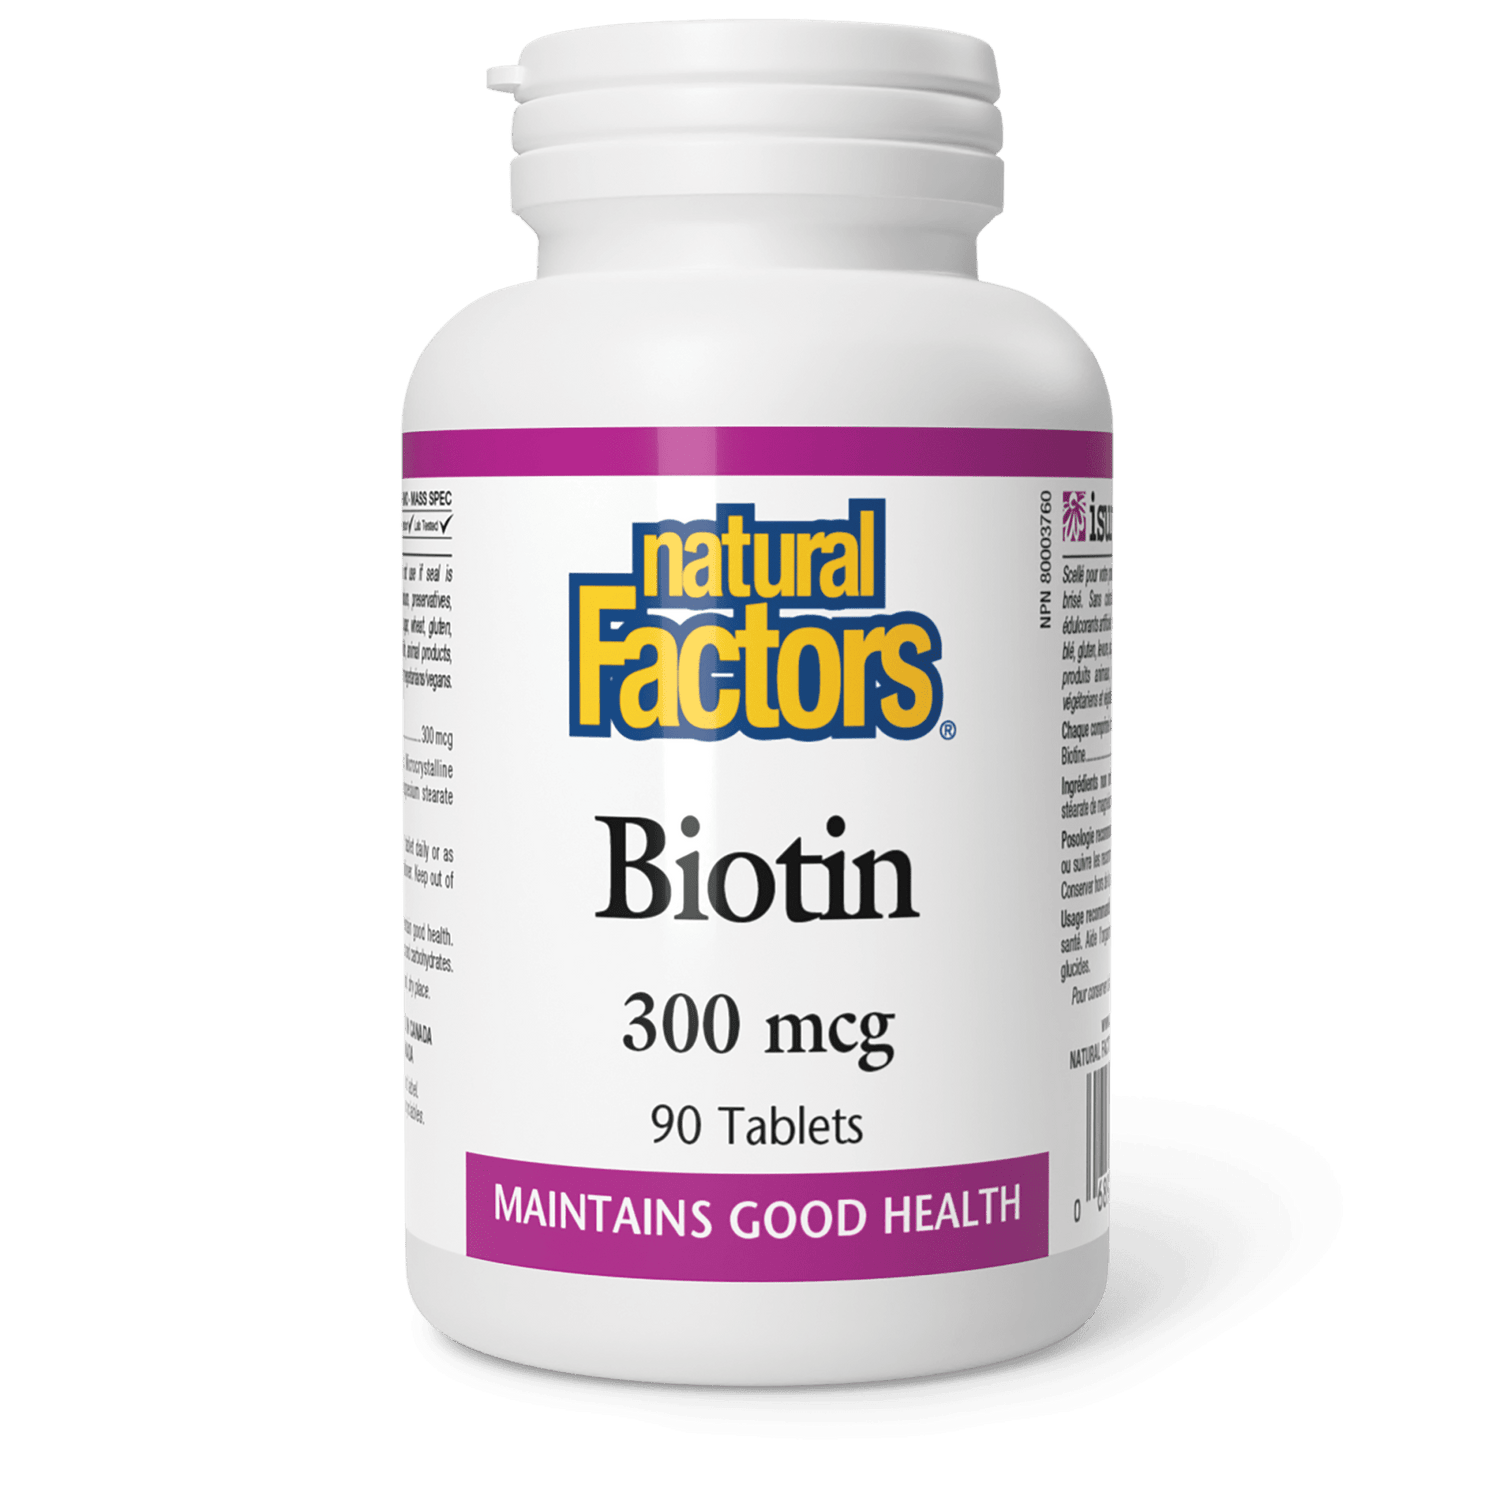 Biotin 300 mcg, Natural Factors|v|image|1260